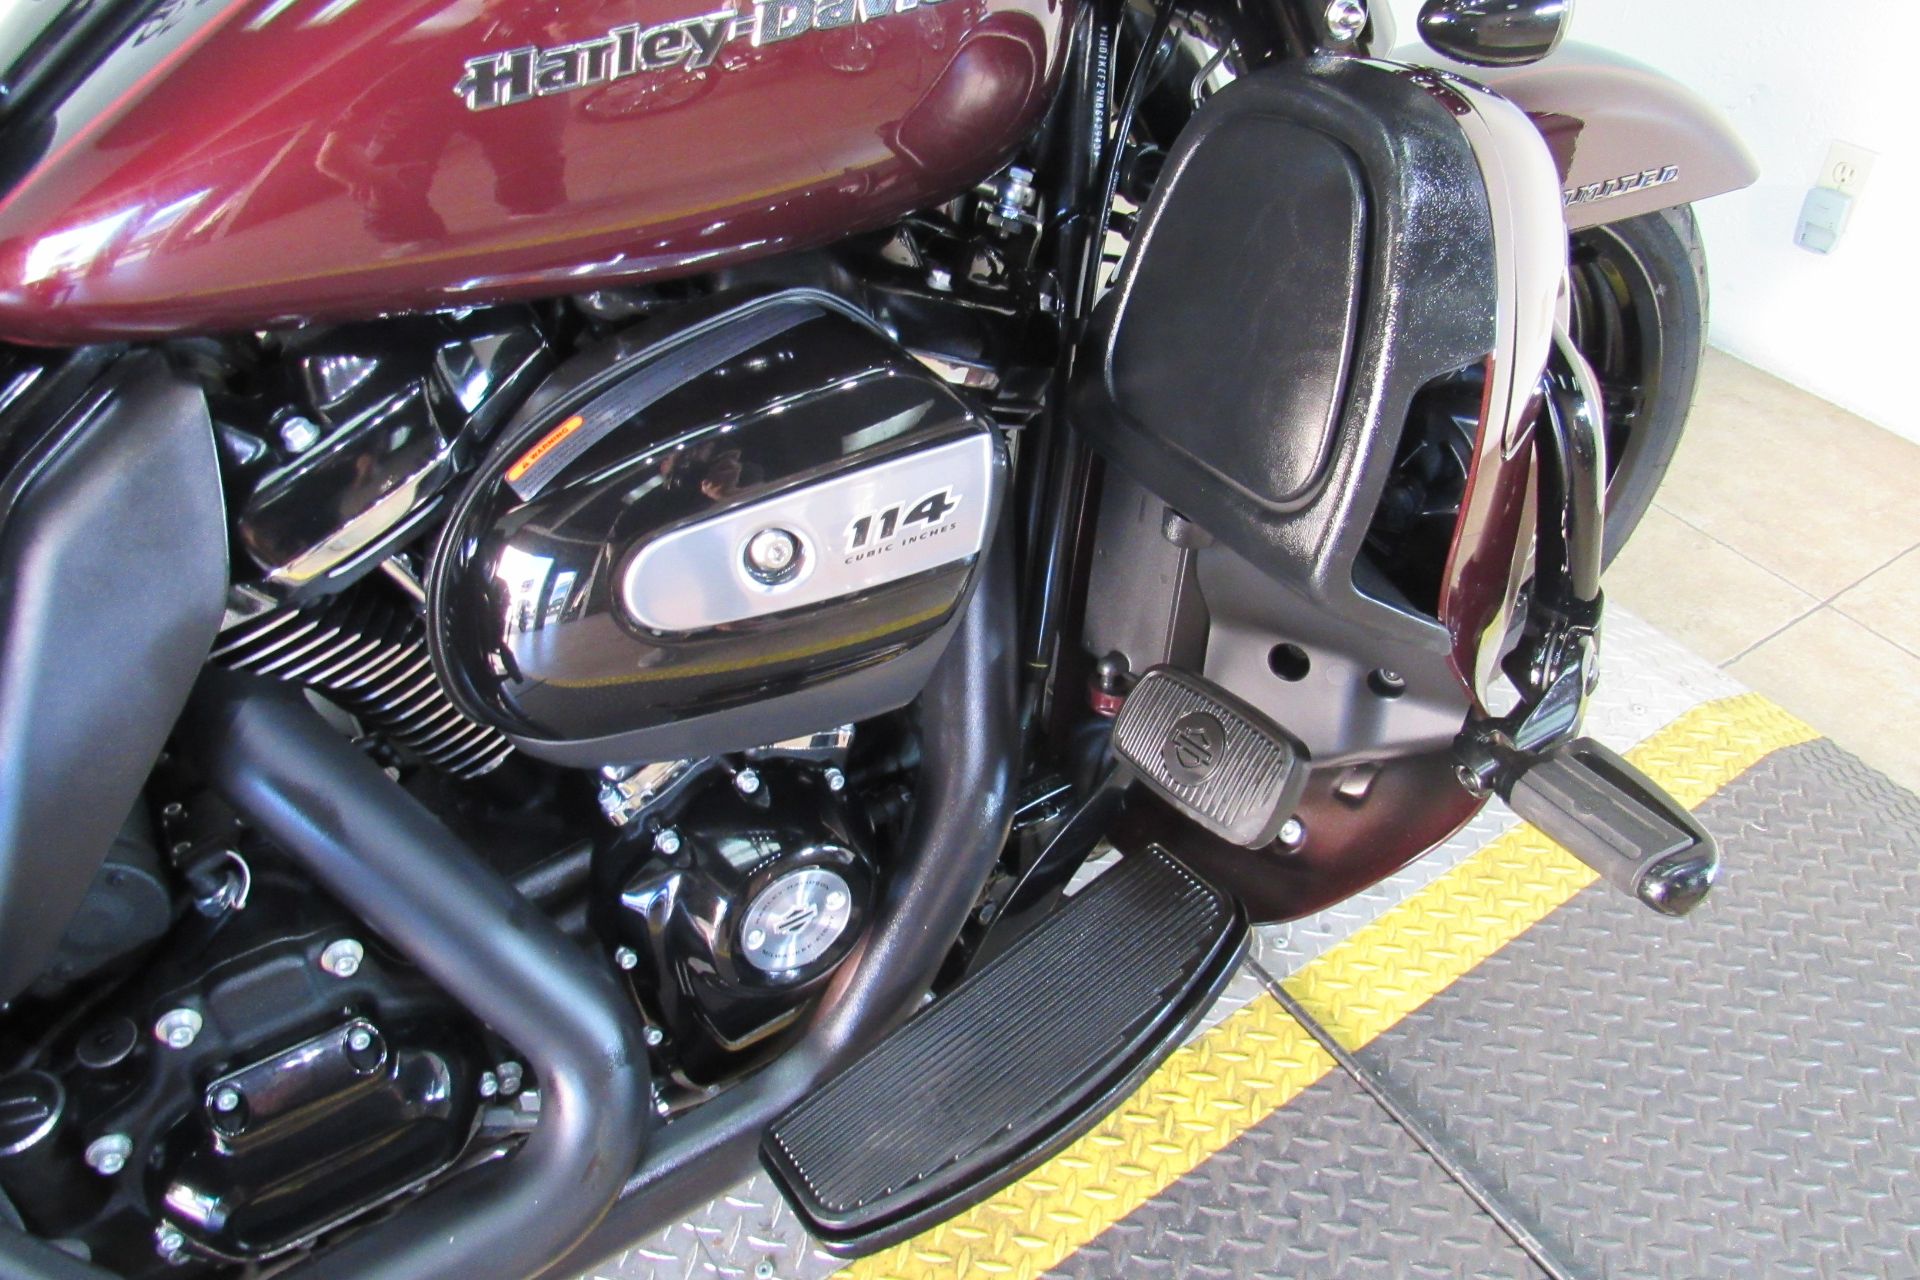 2022 Harley-Davidson Ultra Limited in Temecula, California - Photo 17